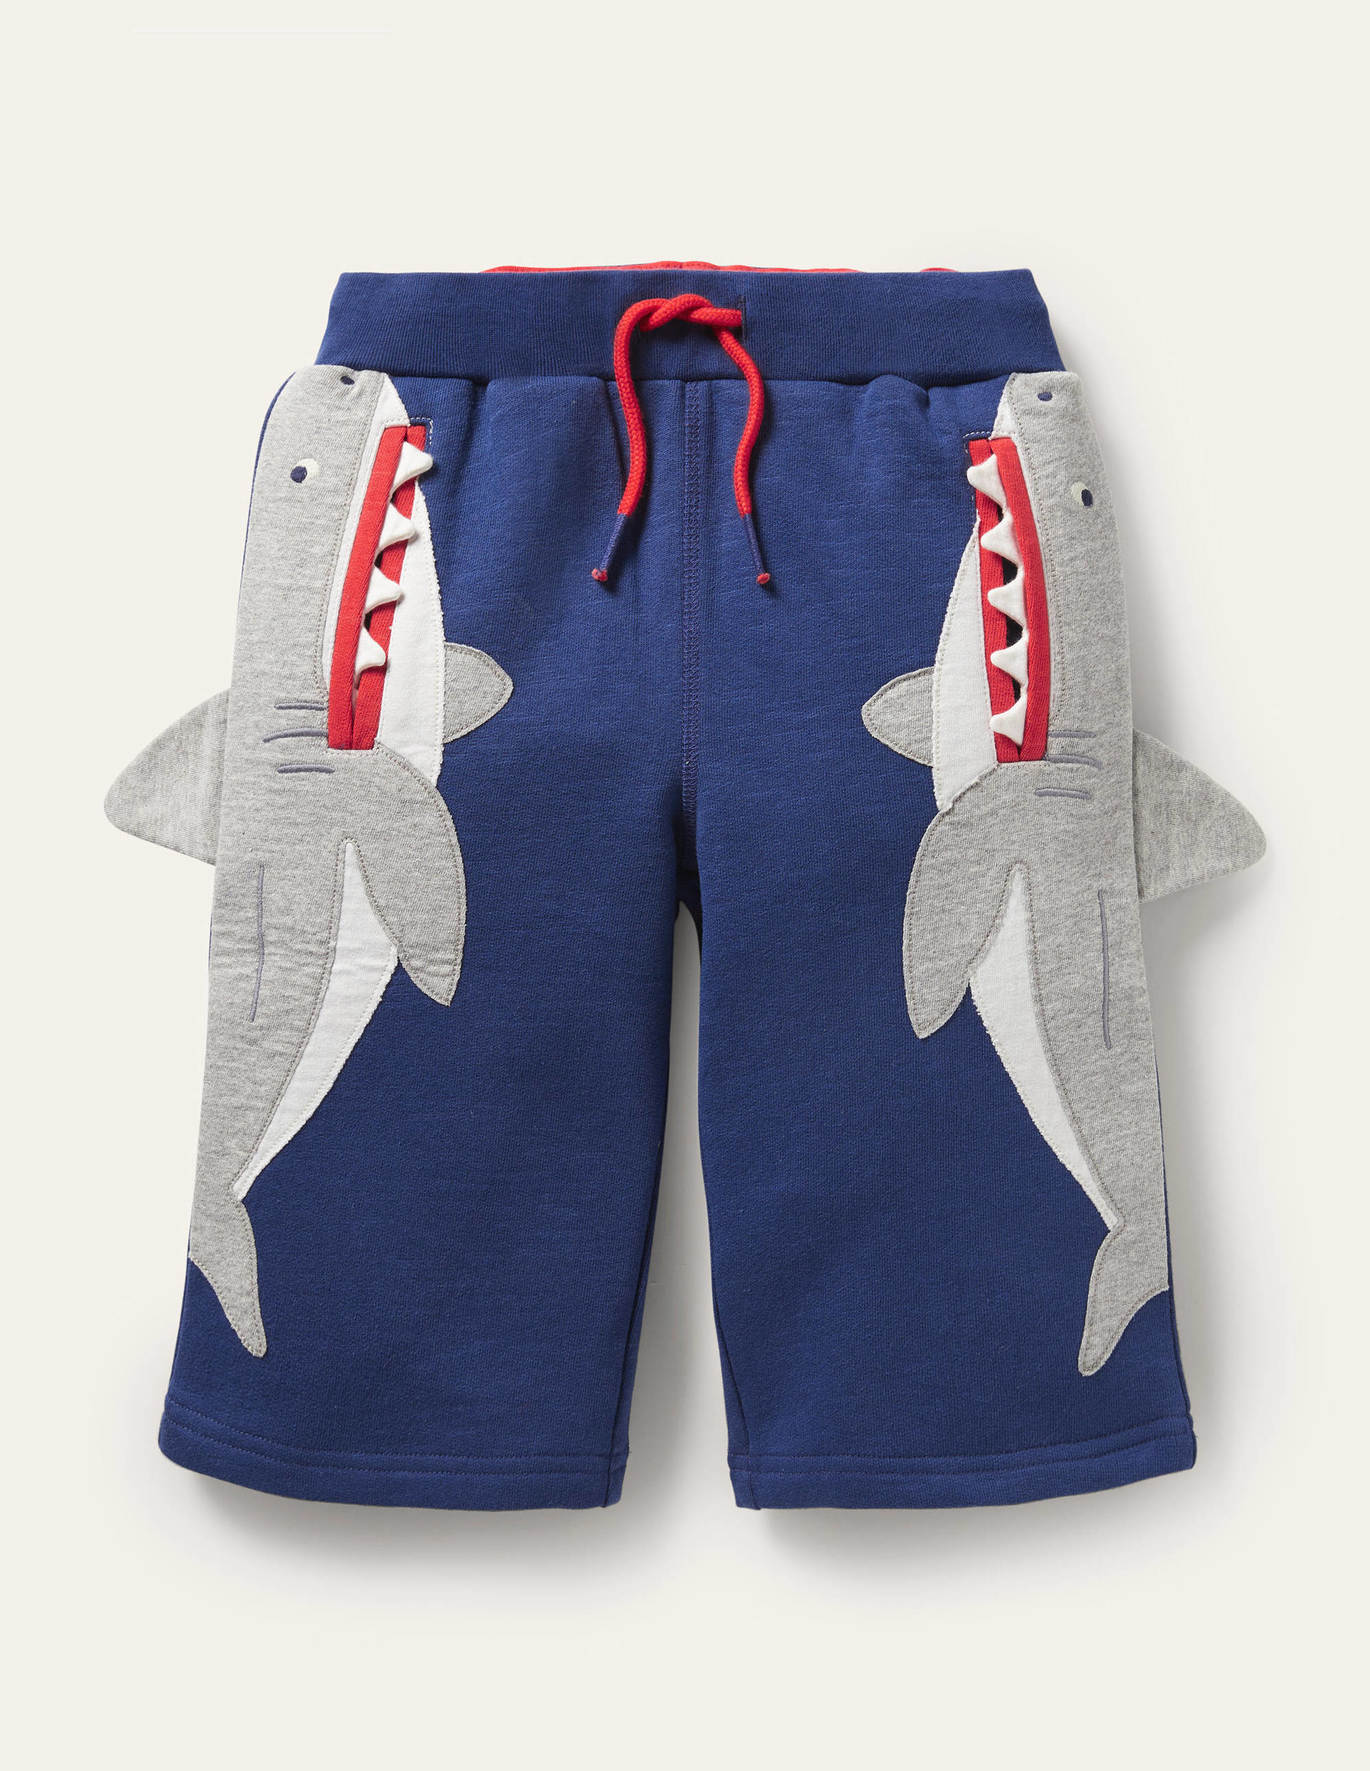 Boden Navy Shark Applique Jersey Shorts - Starboard Blue Sharks